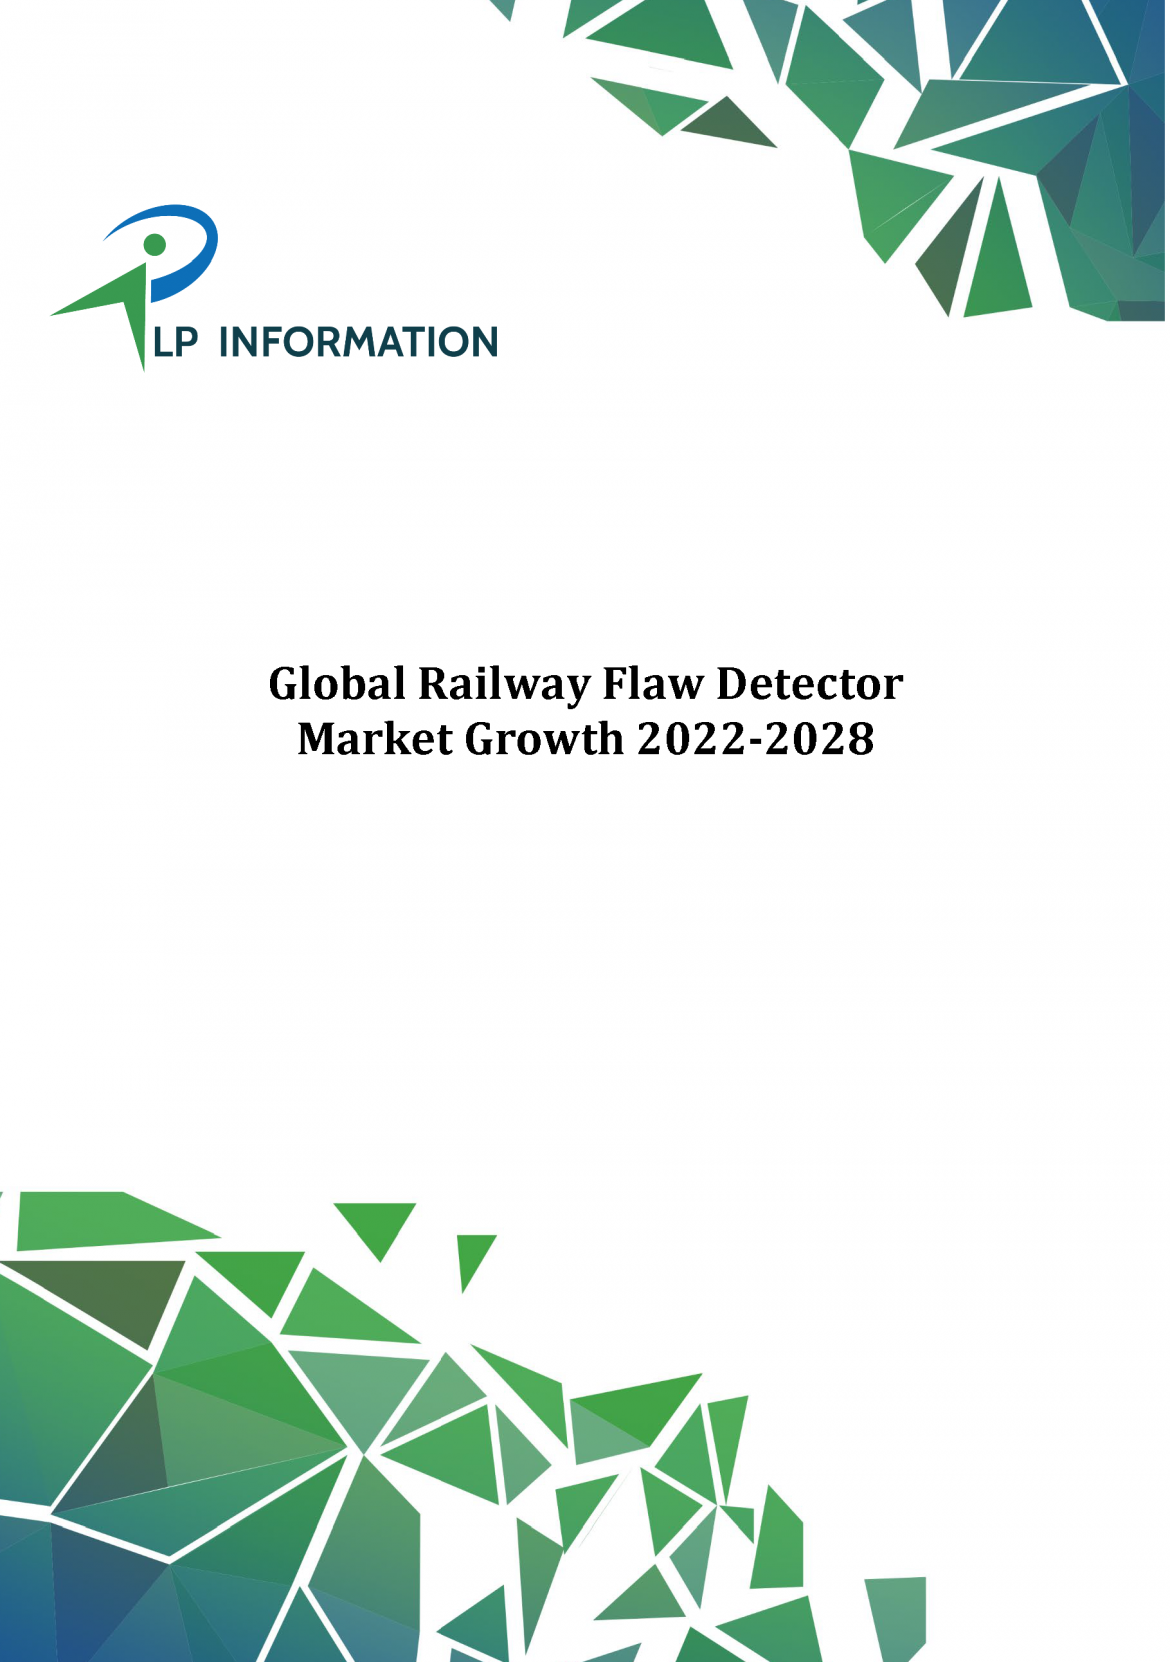 Global Railway Flaw Detector Market Growth 2022-2028